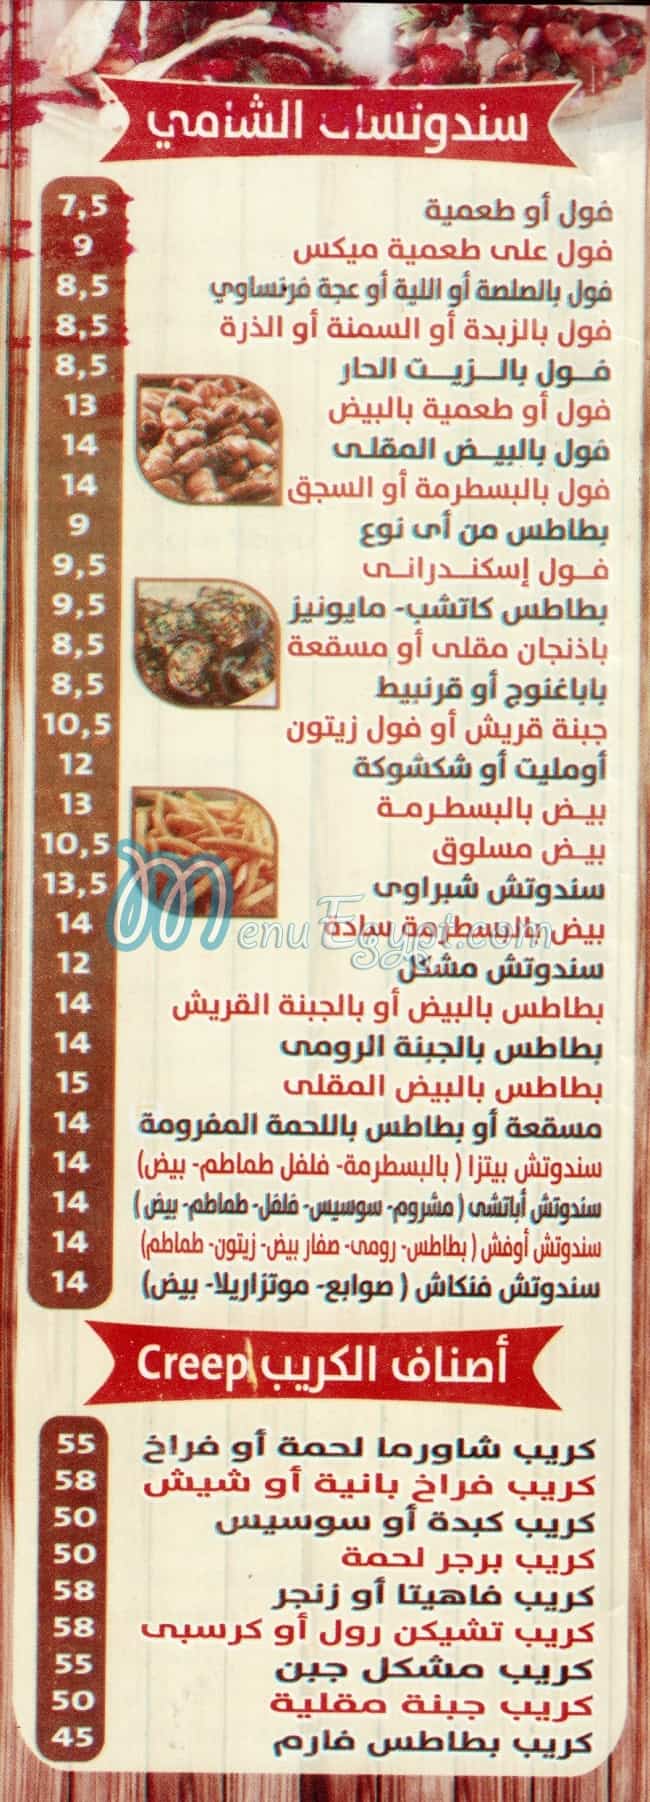 EL SHABRAWY Khatam El Morsaleen delivery menu